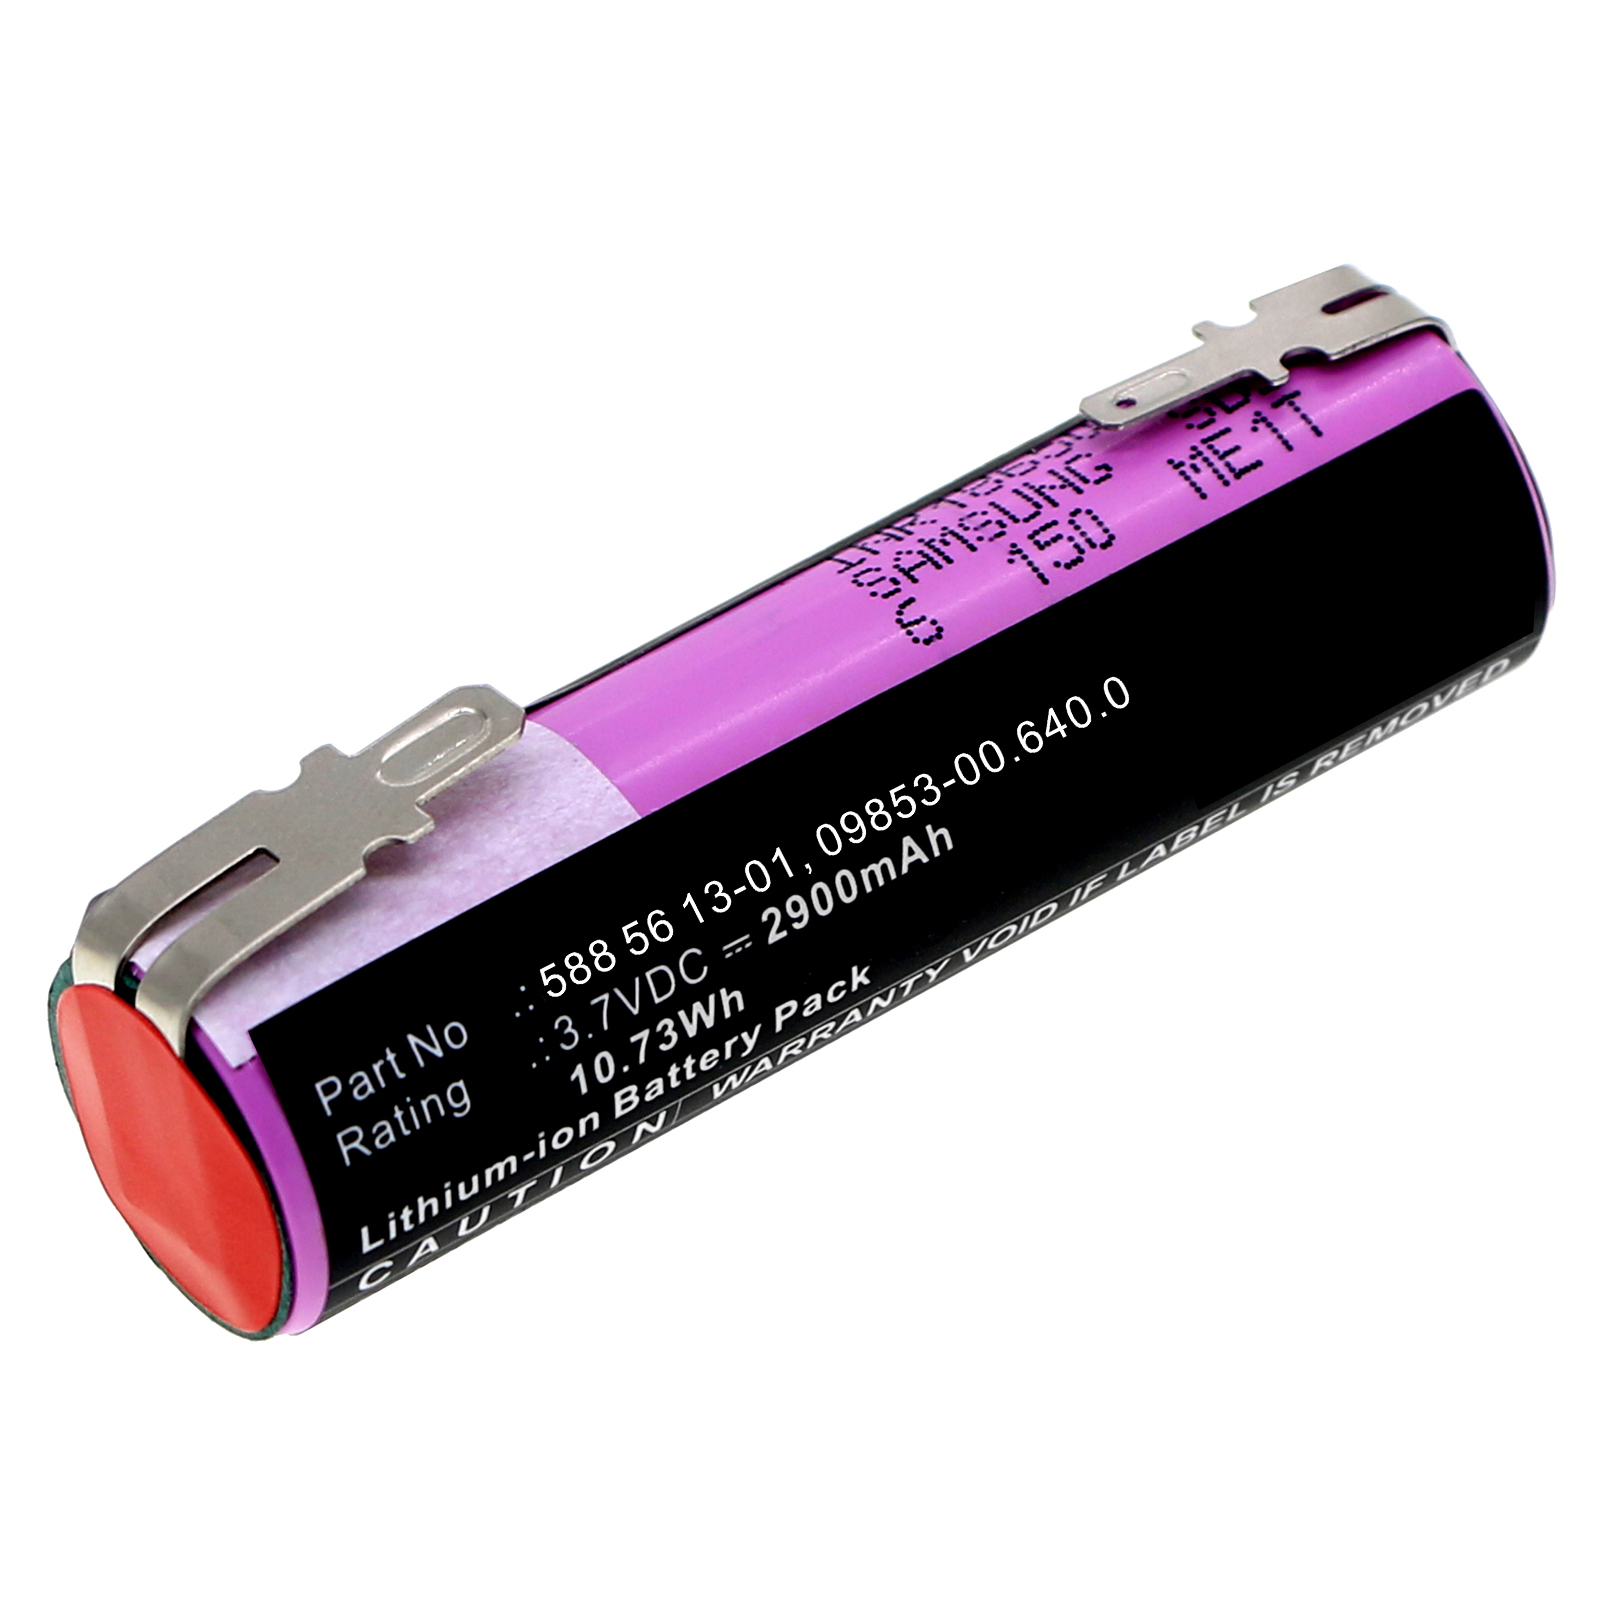 Batteries for GardenaGardening Tools